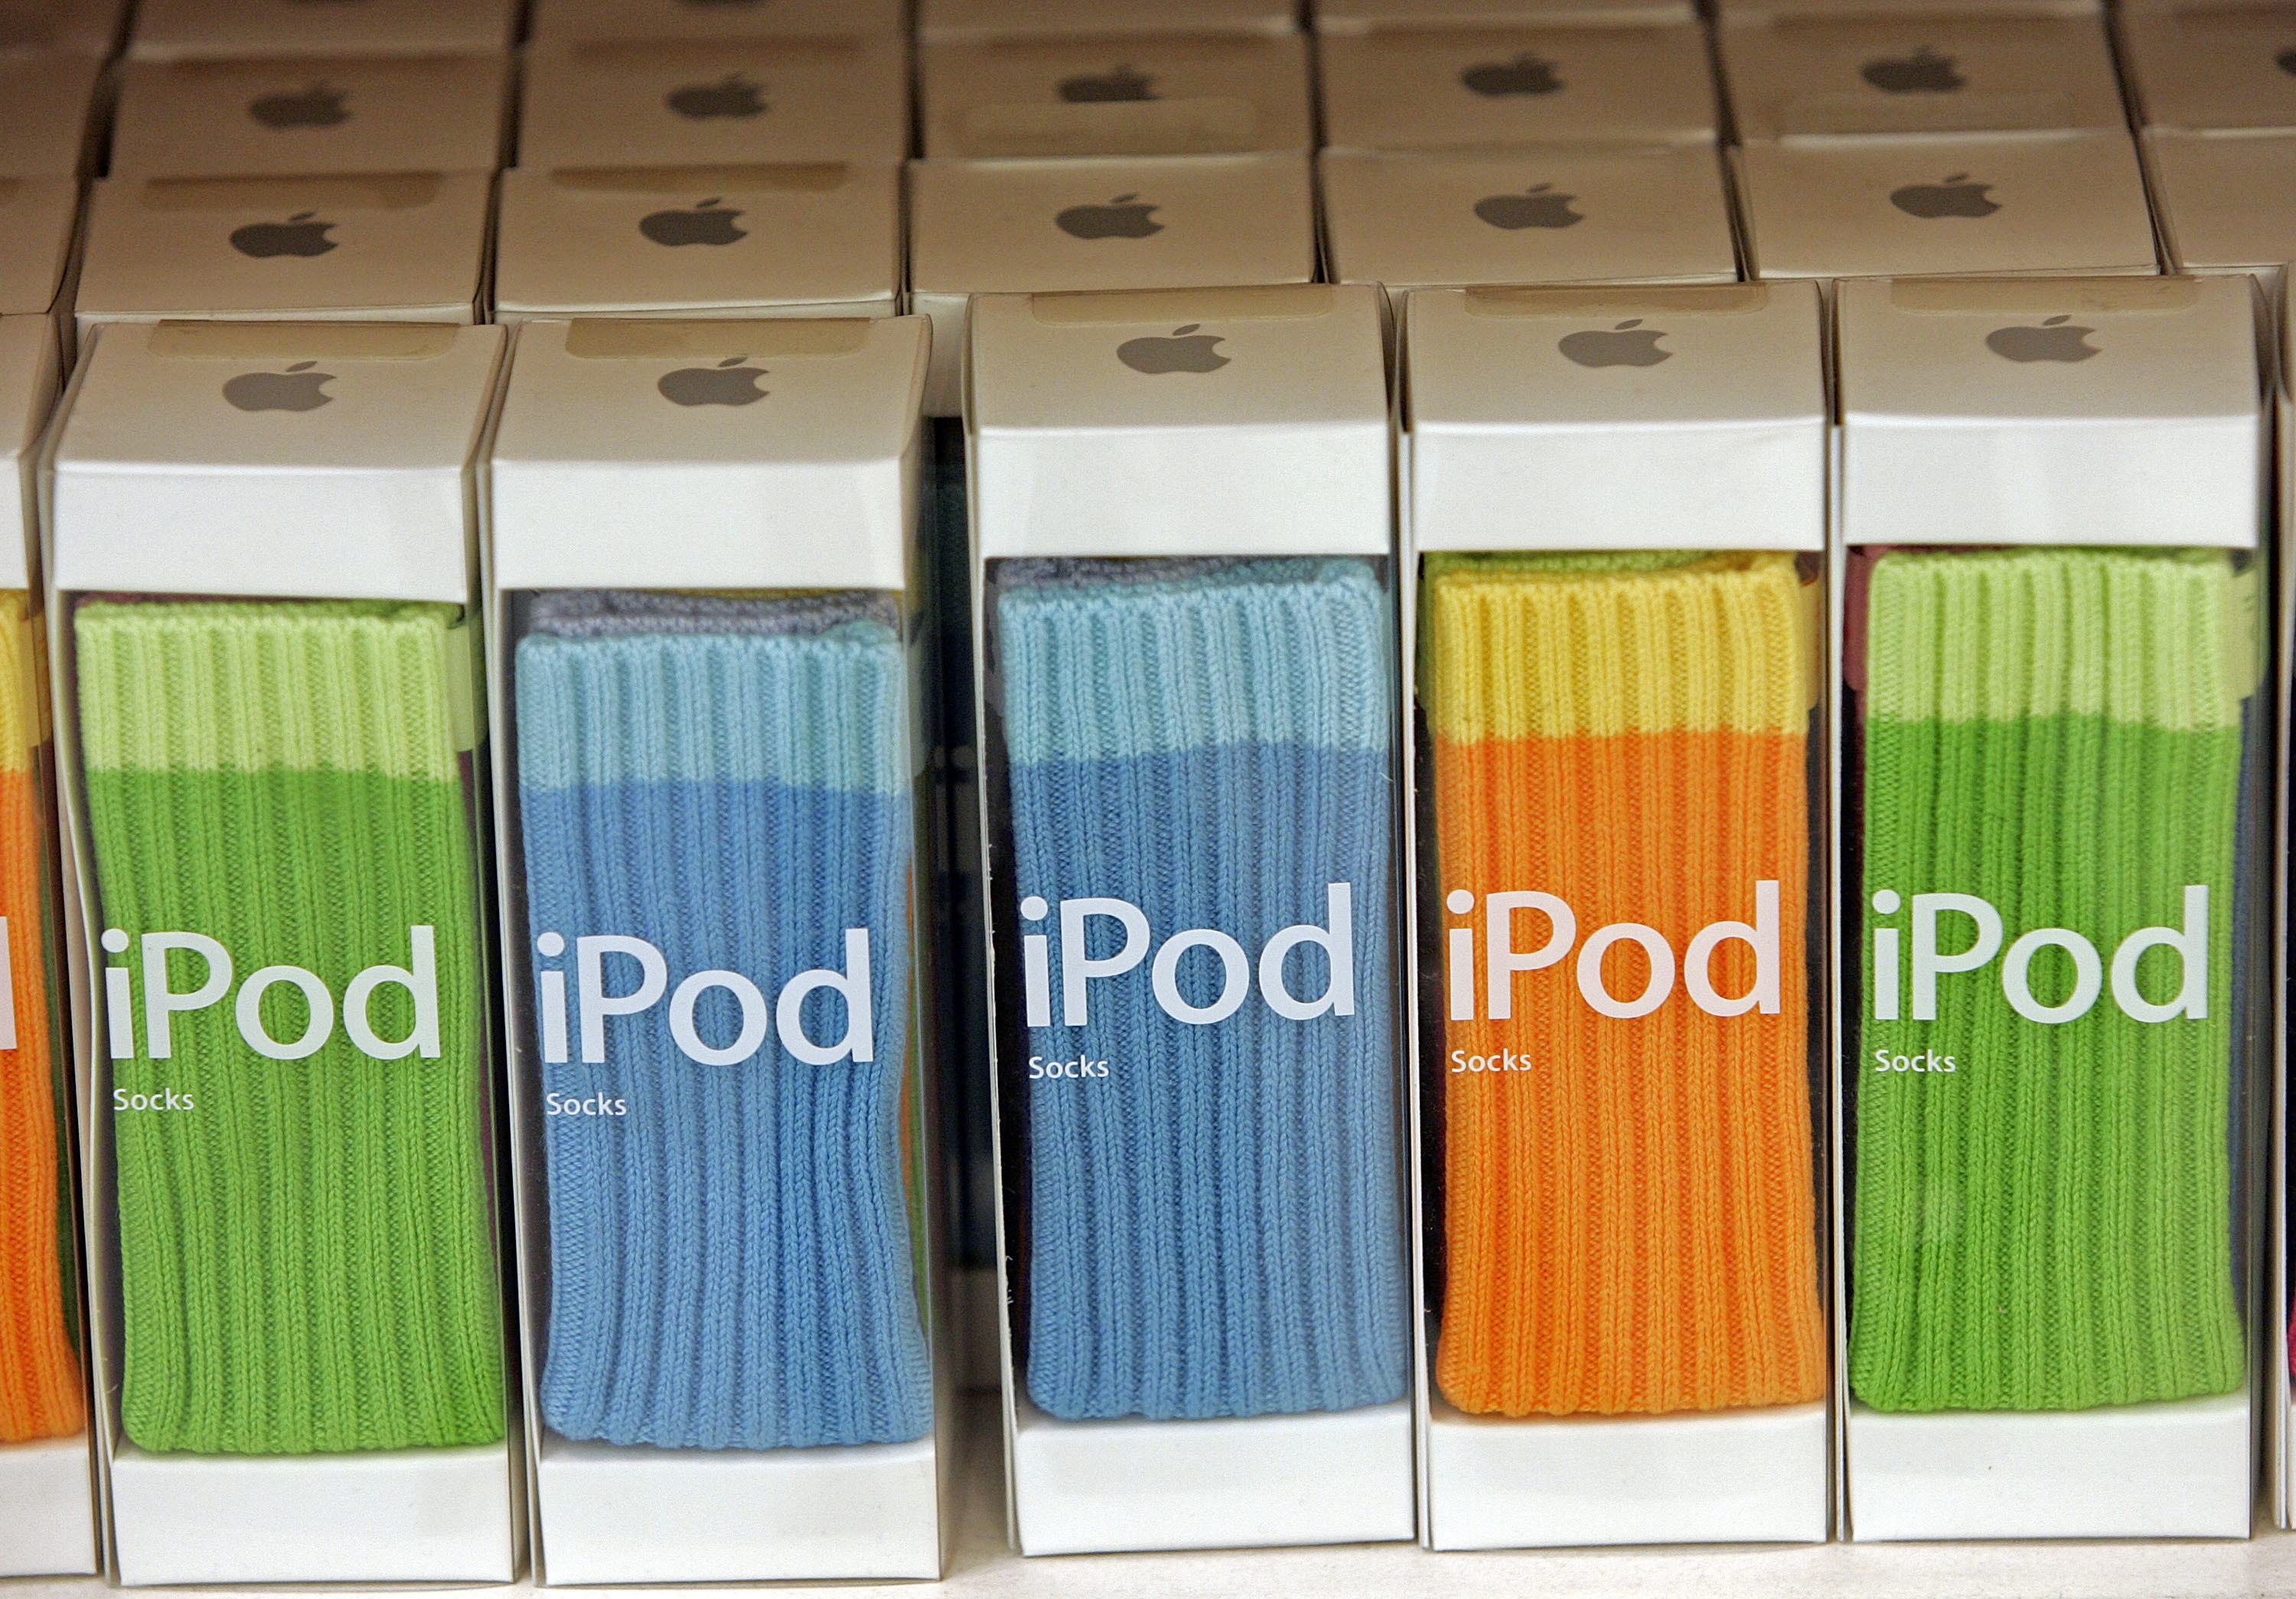 iPod socks on display on the shelf